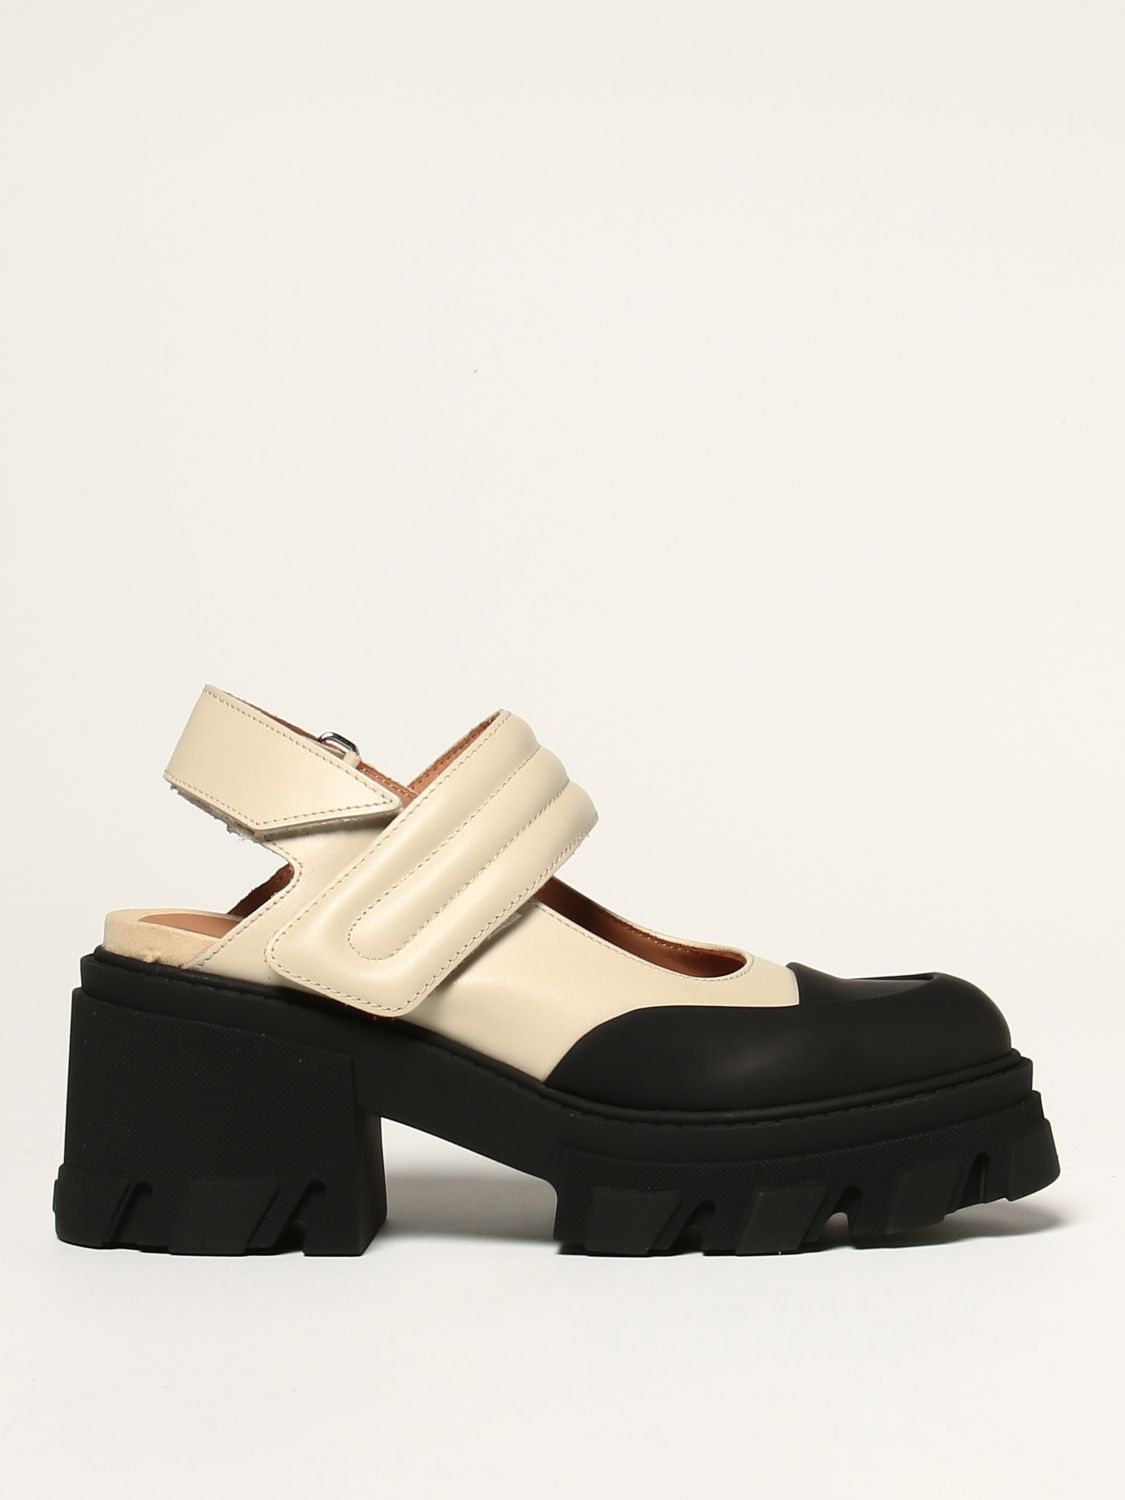 High heel shoes Ganni: Mary Jane Ganni leather slingbacks yellow cream 1